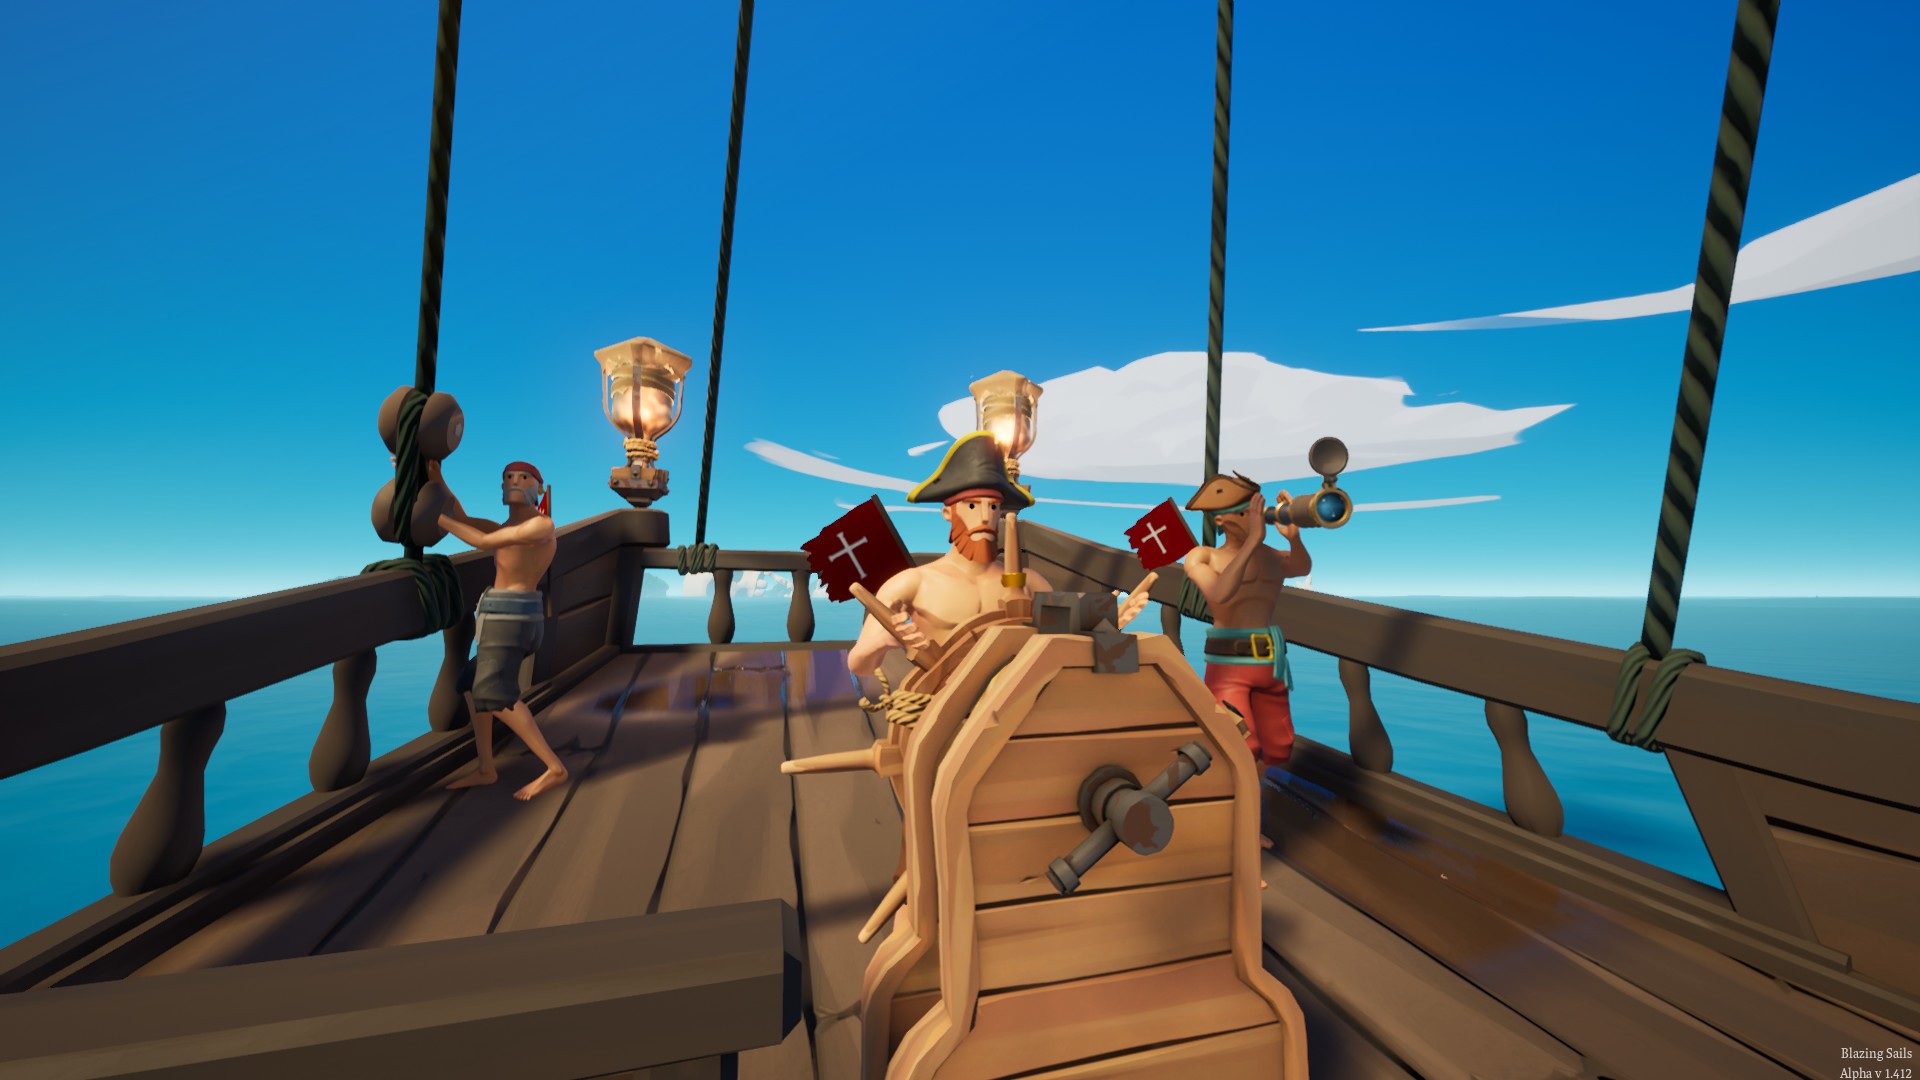 Пиратская версия последний. Блейзинг Саилс. Пират батл рояль. Игра про пиратов Sea of Thieves. Blazing Sails: Pirate Battle.